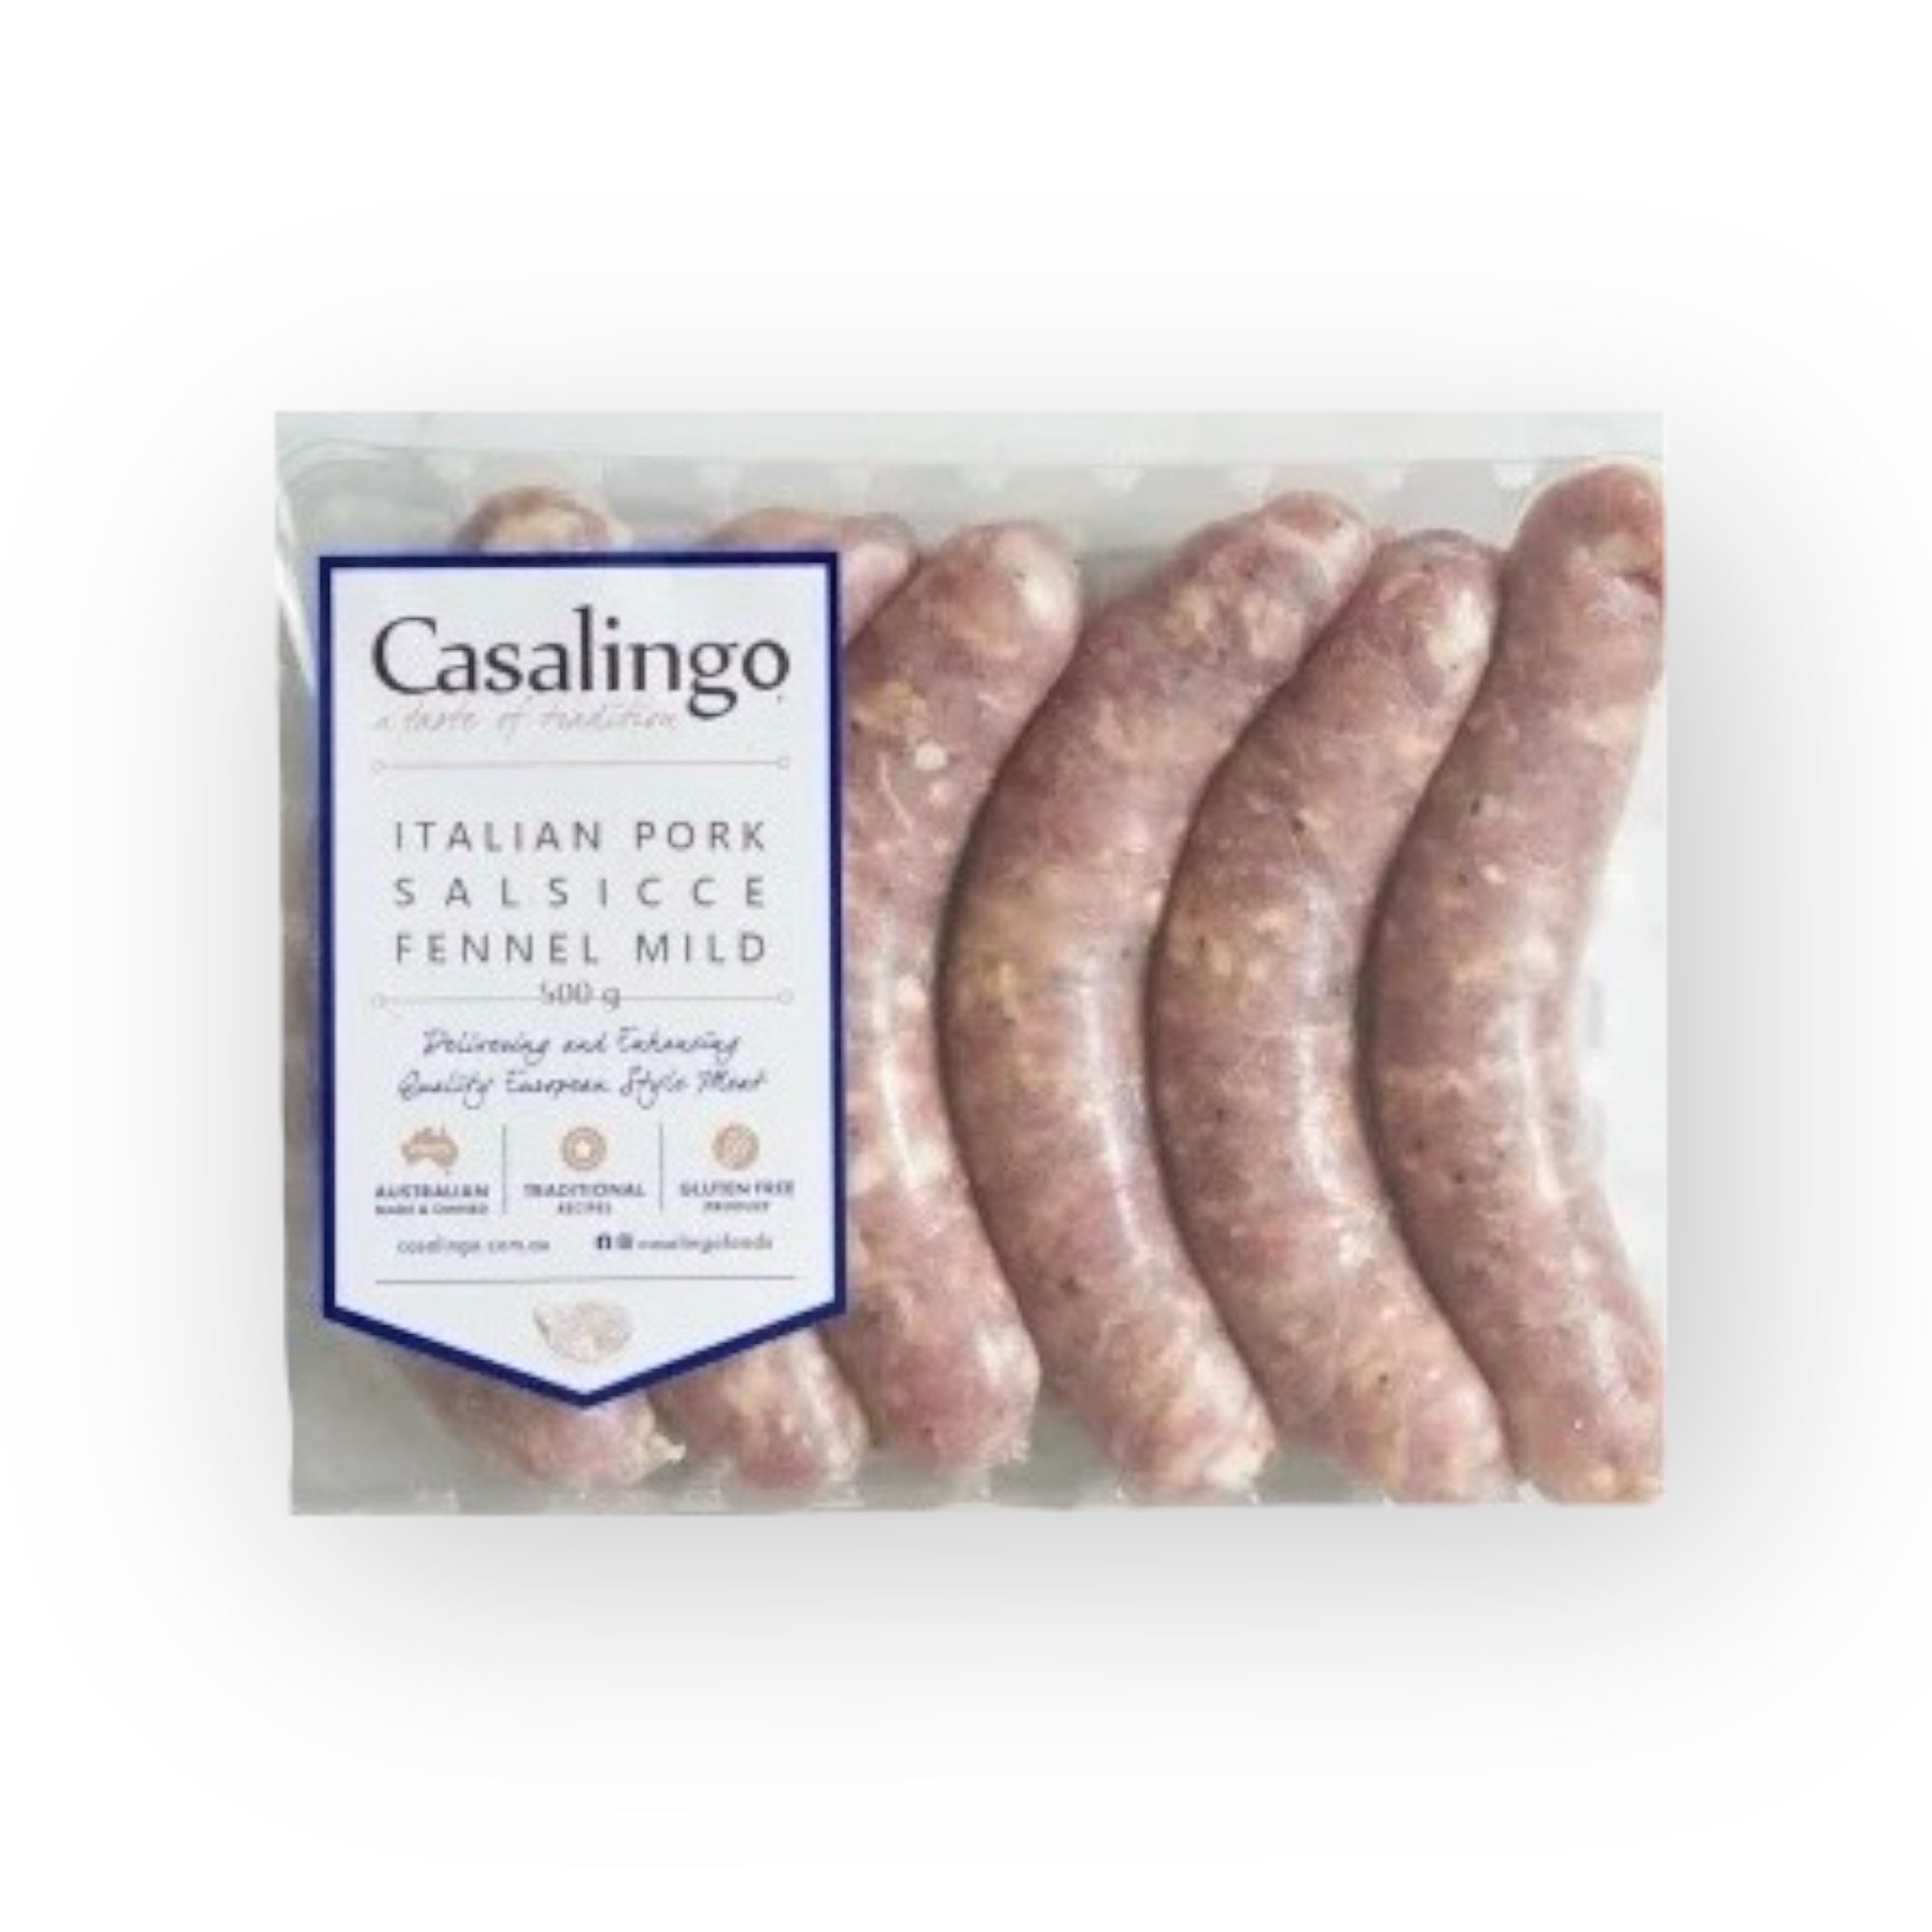 Casalingo Italian Pork Fennel Mild Sausage 500g